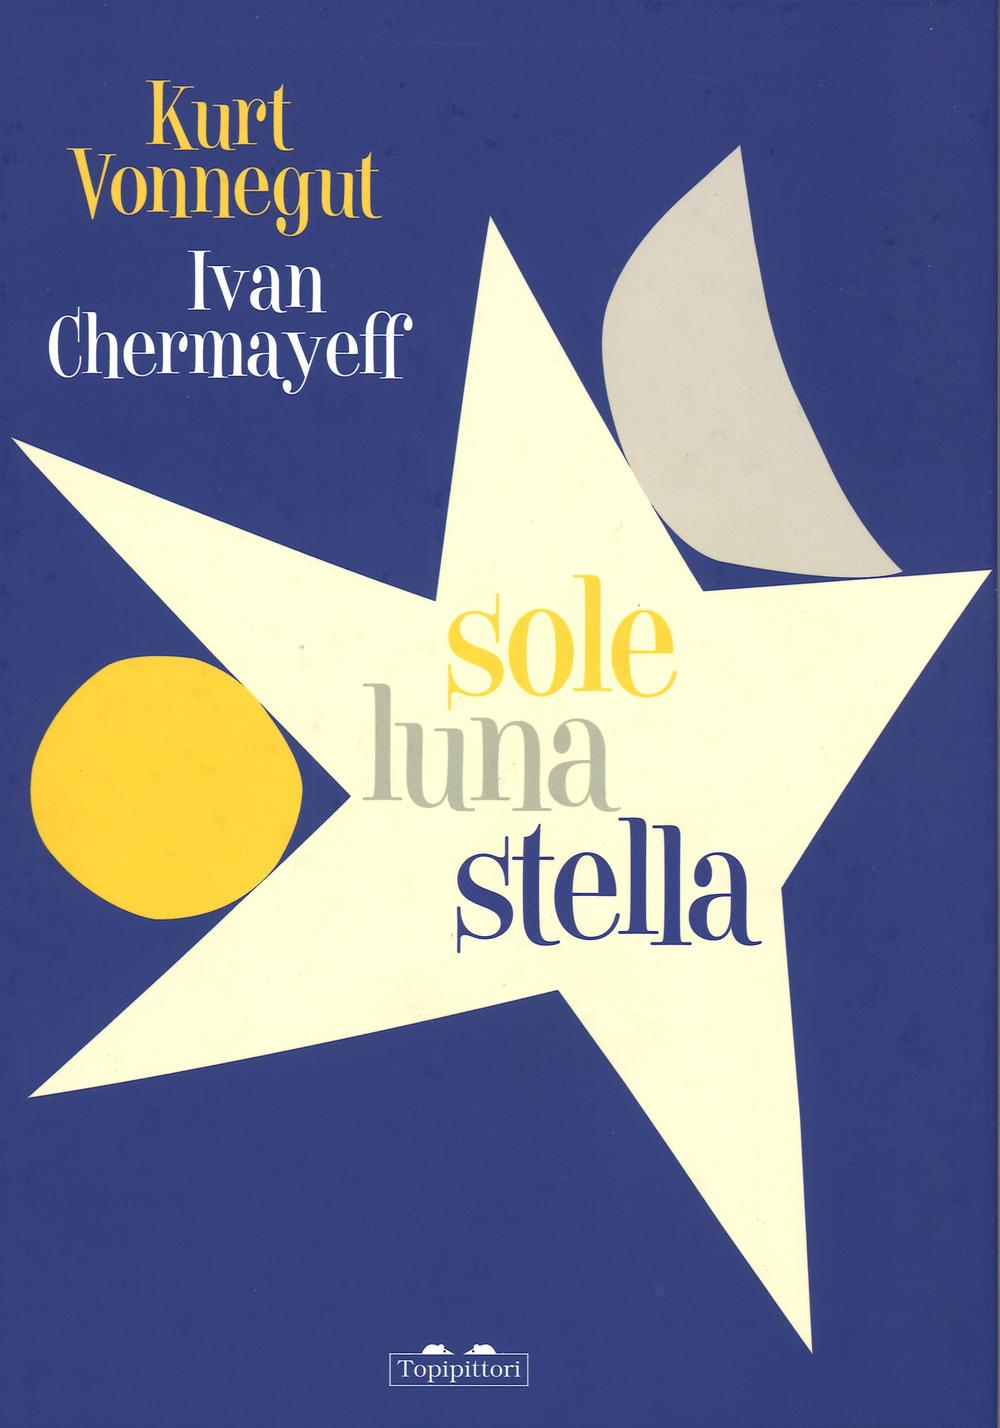 Kniha Sole luna stella Ivan Chermayeff